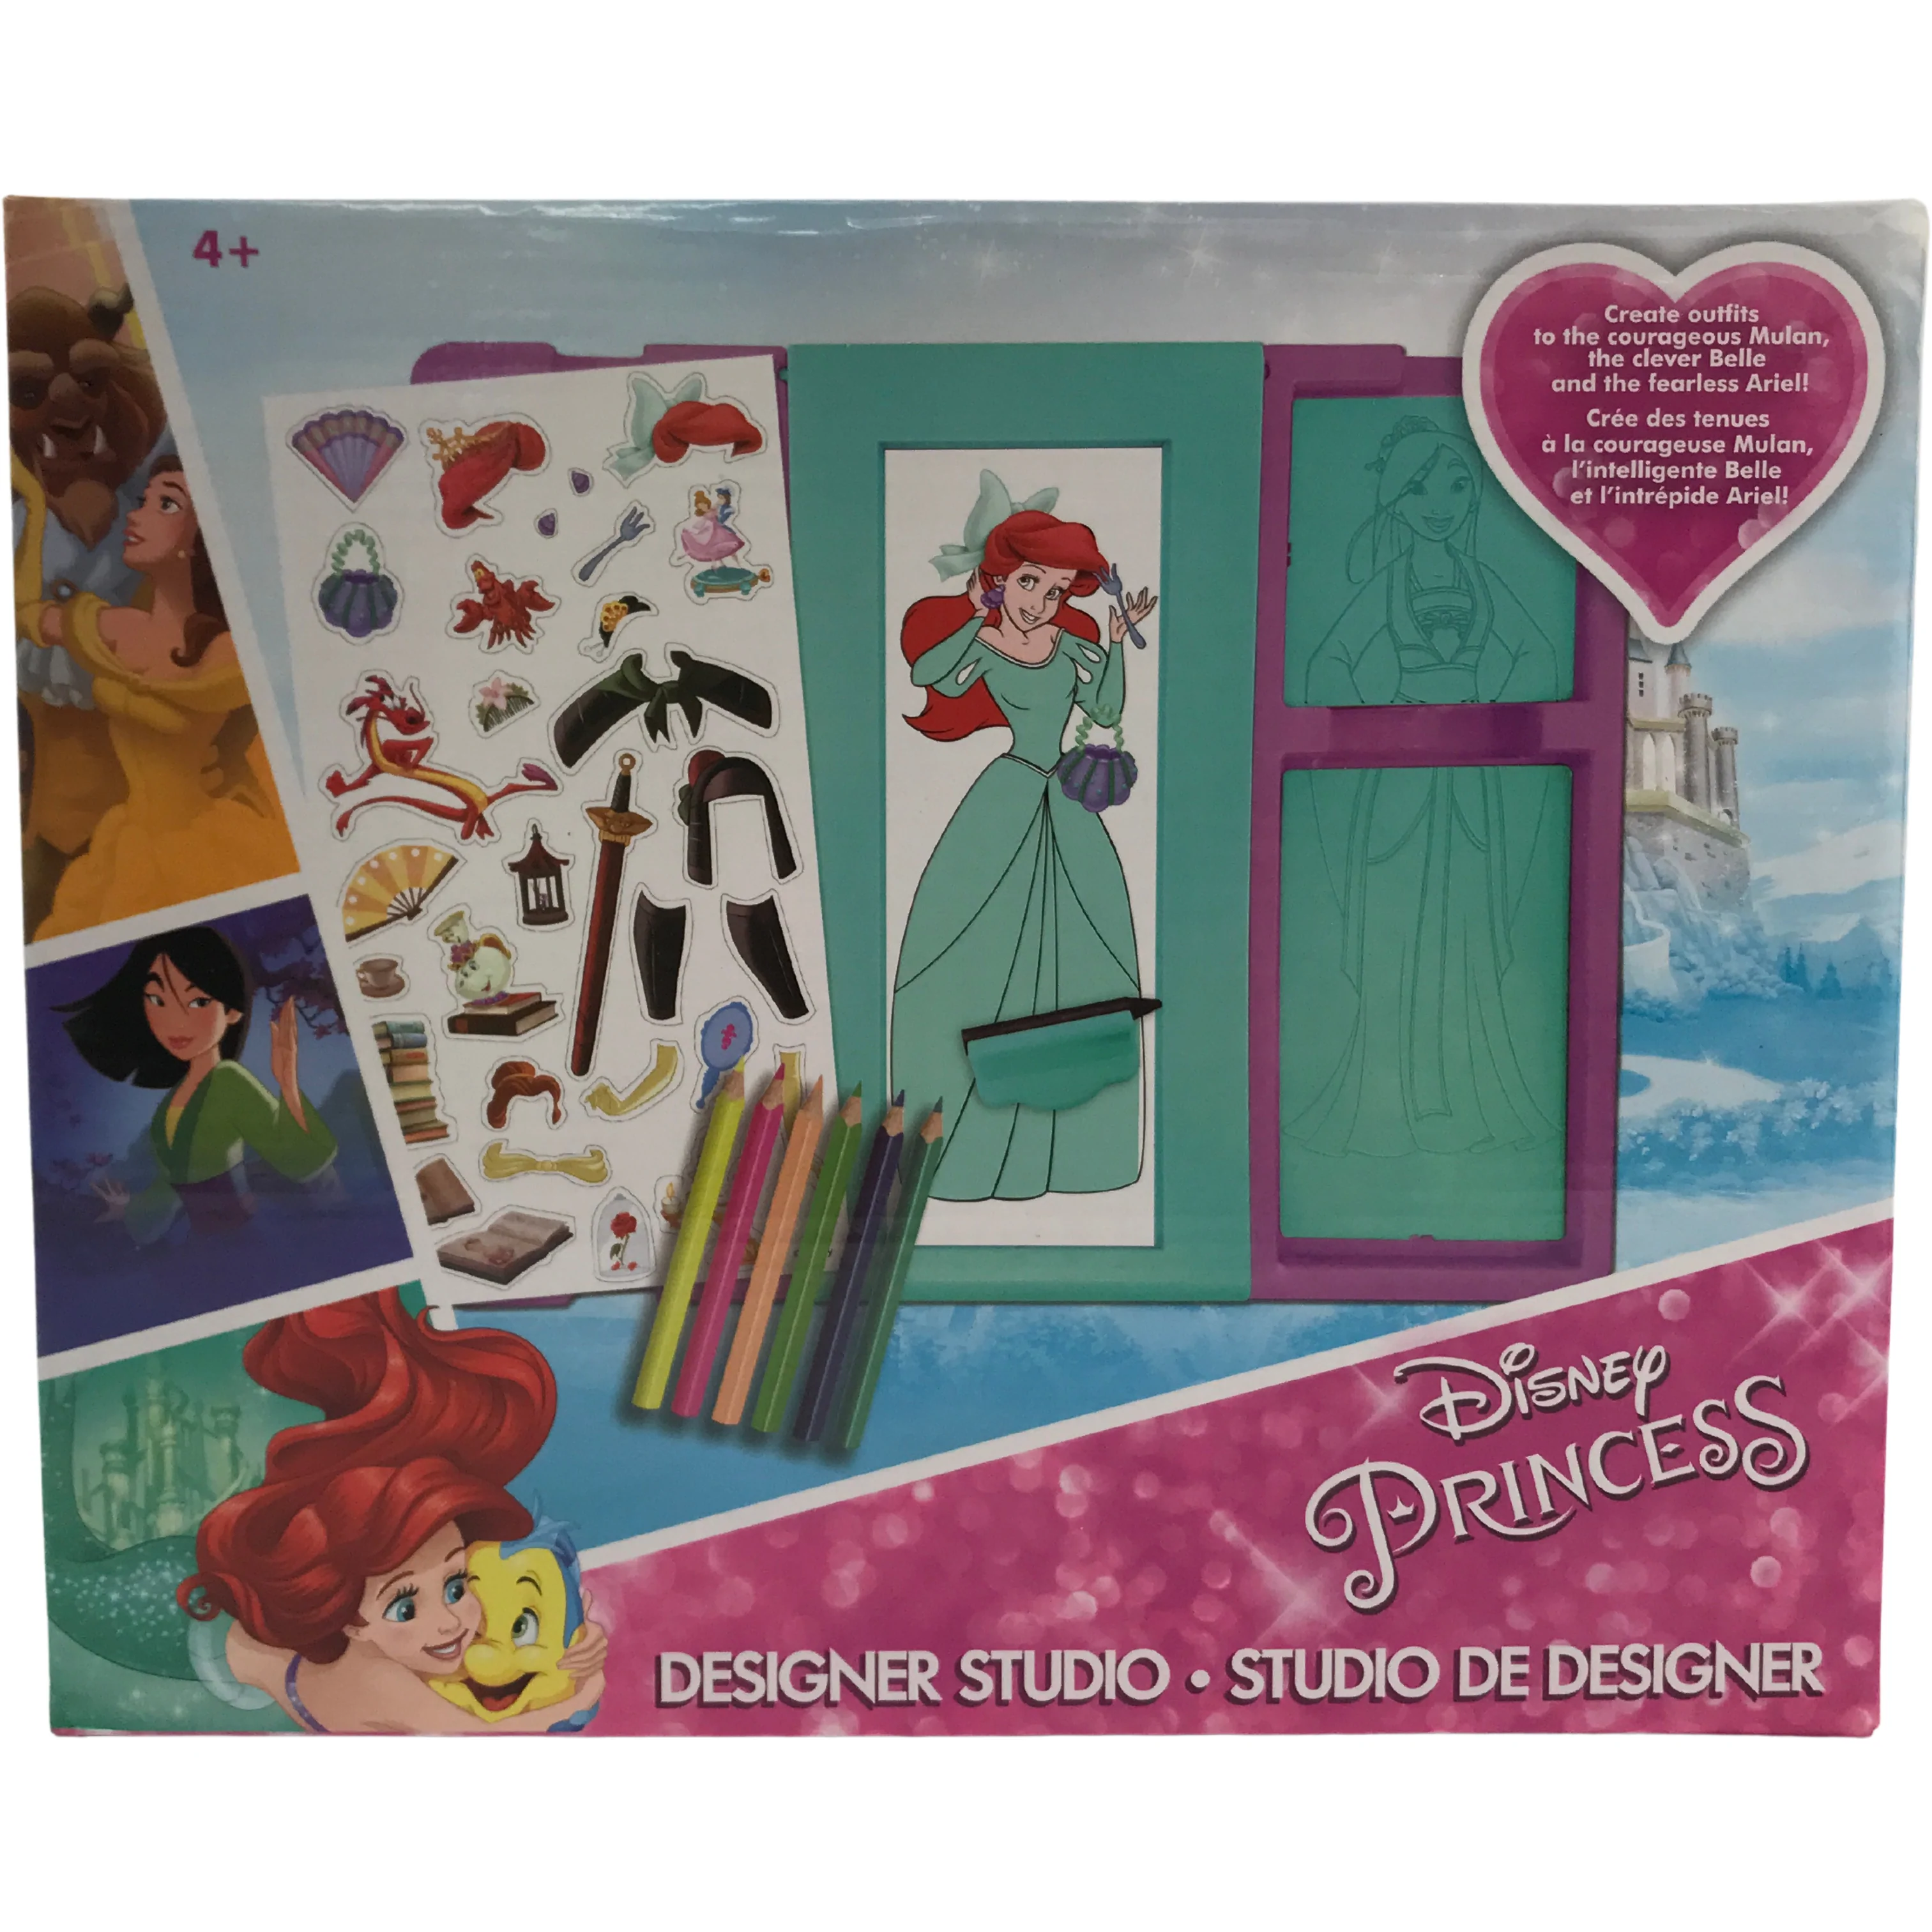 Disney Princess Designer Studio / Colouring Crafts / Girl's Drawing / Fashion Crafts